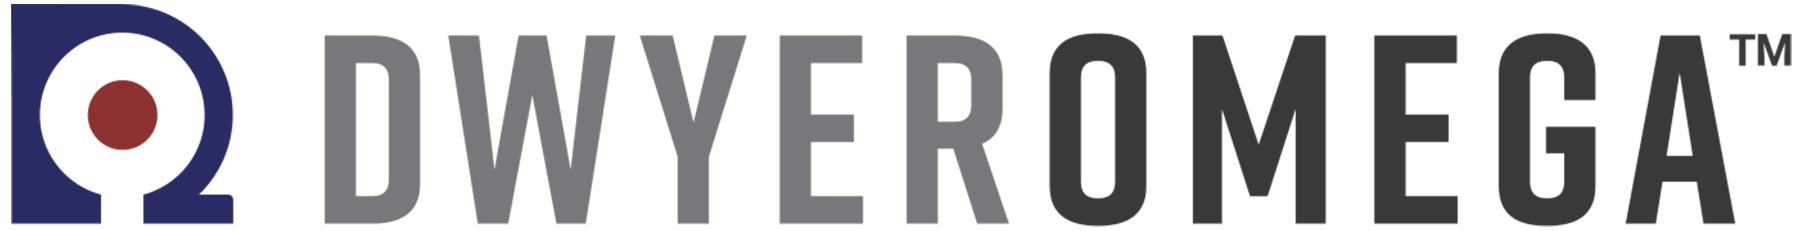 DwyerOmega logo